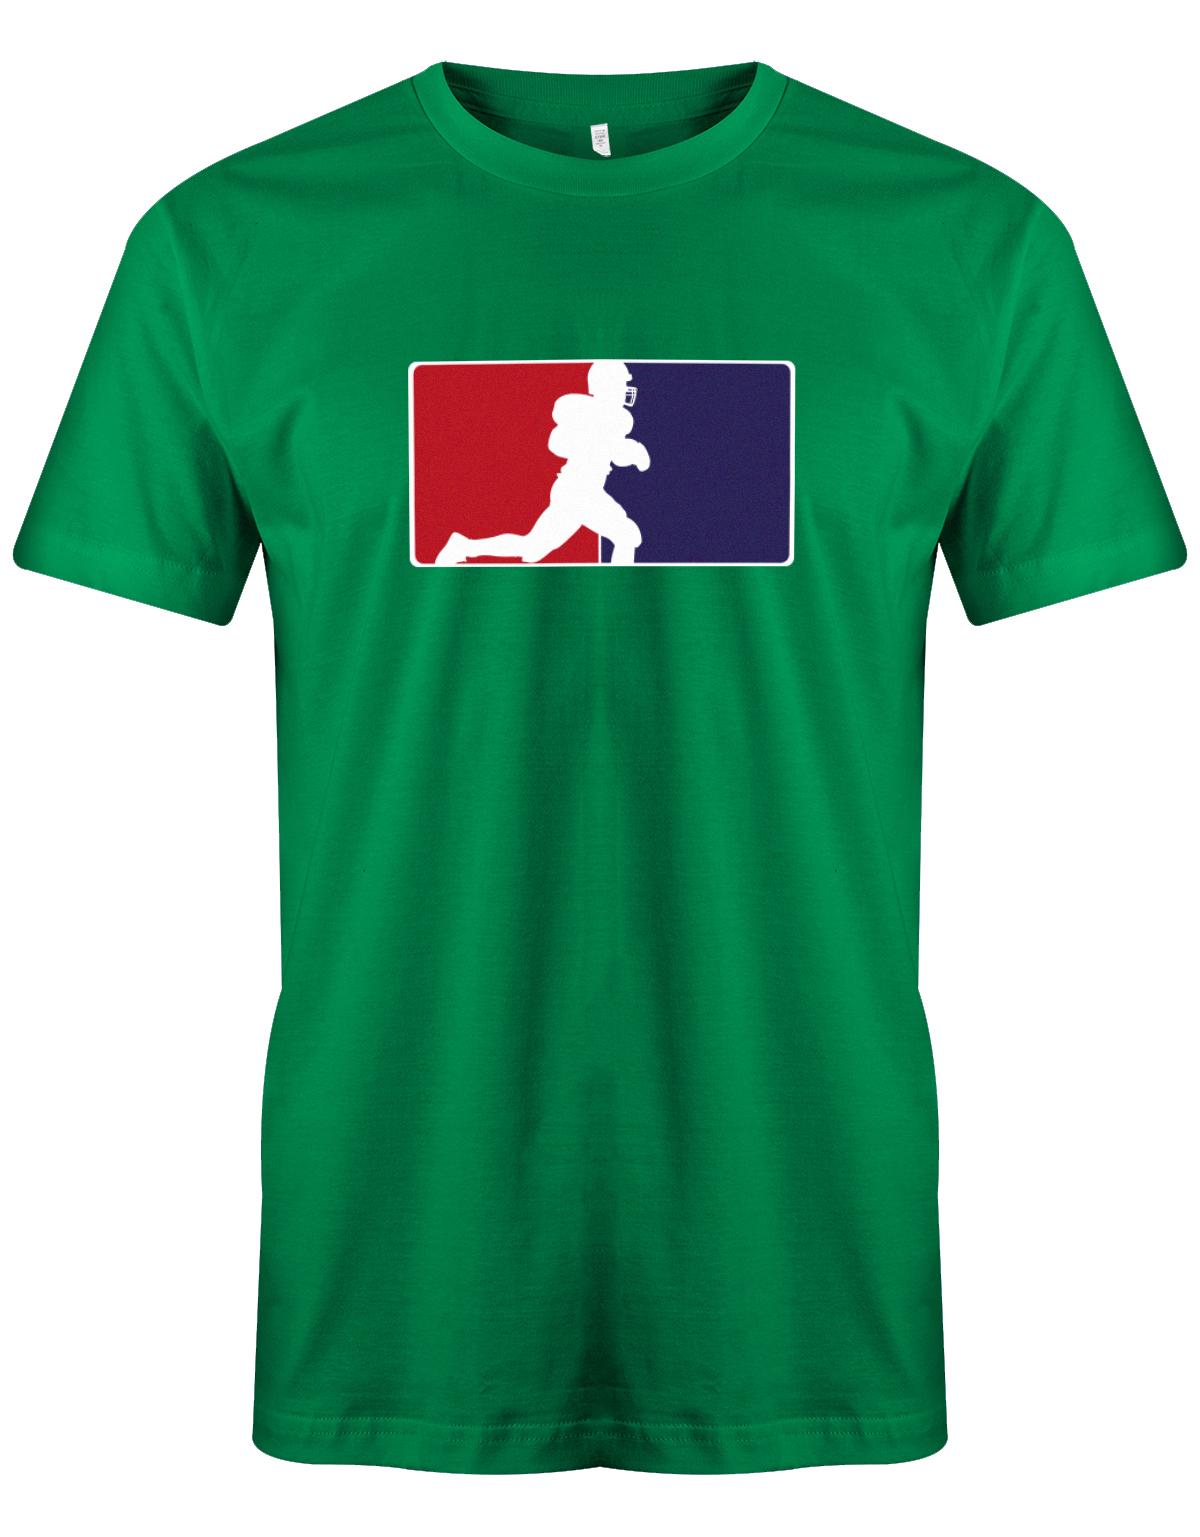 Football-Logo-Herren-Shirt-Gruen